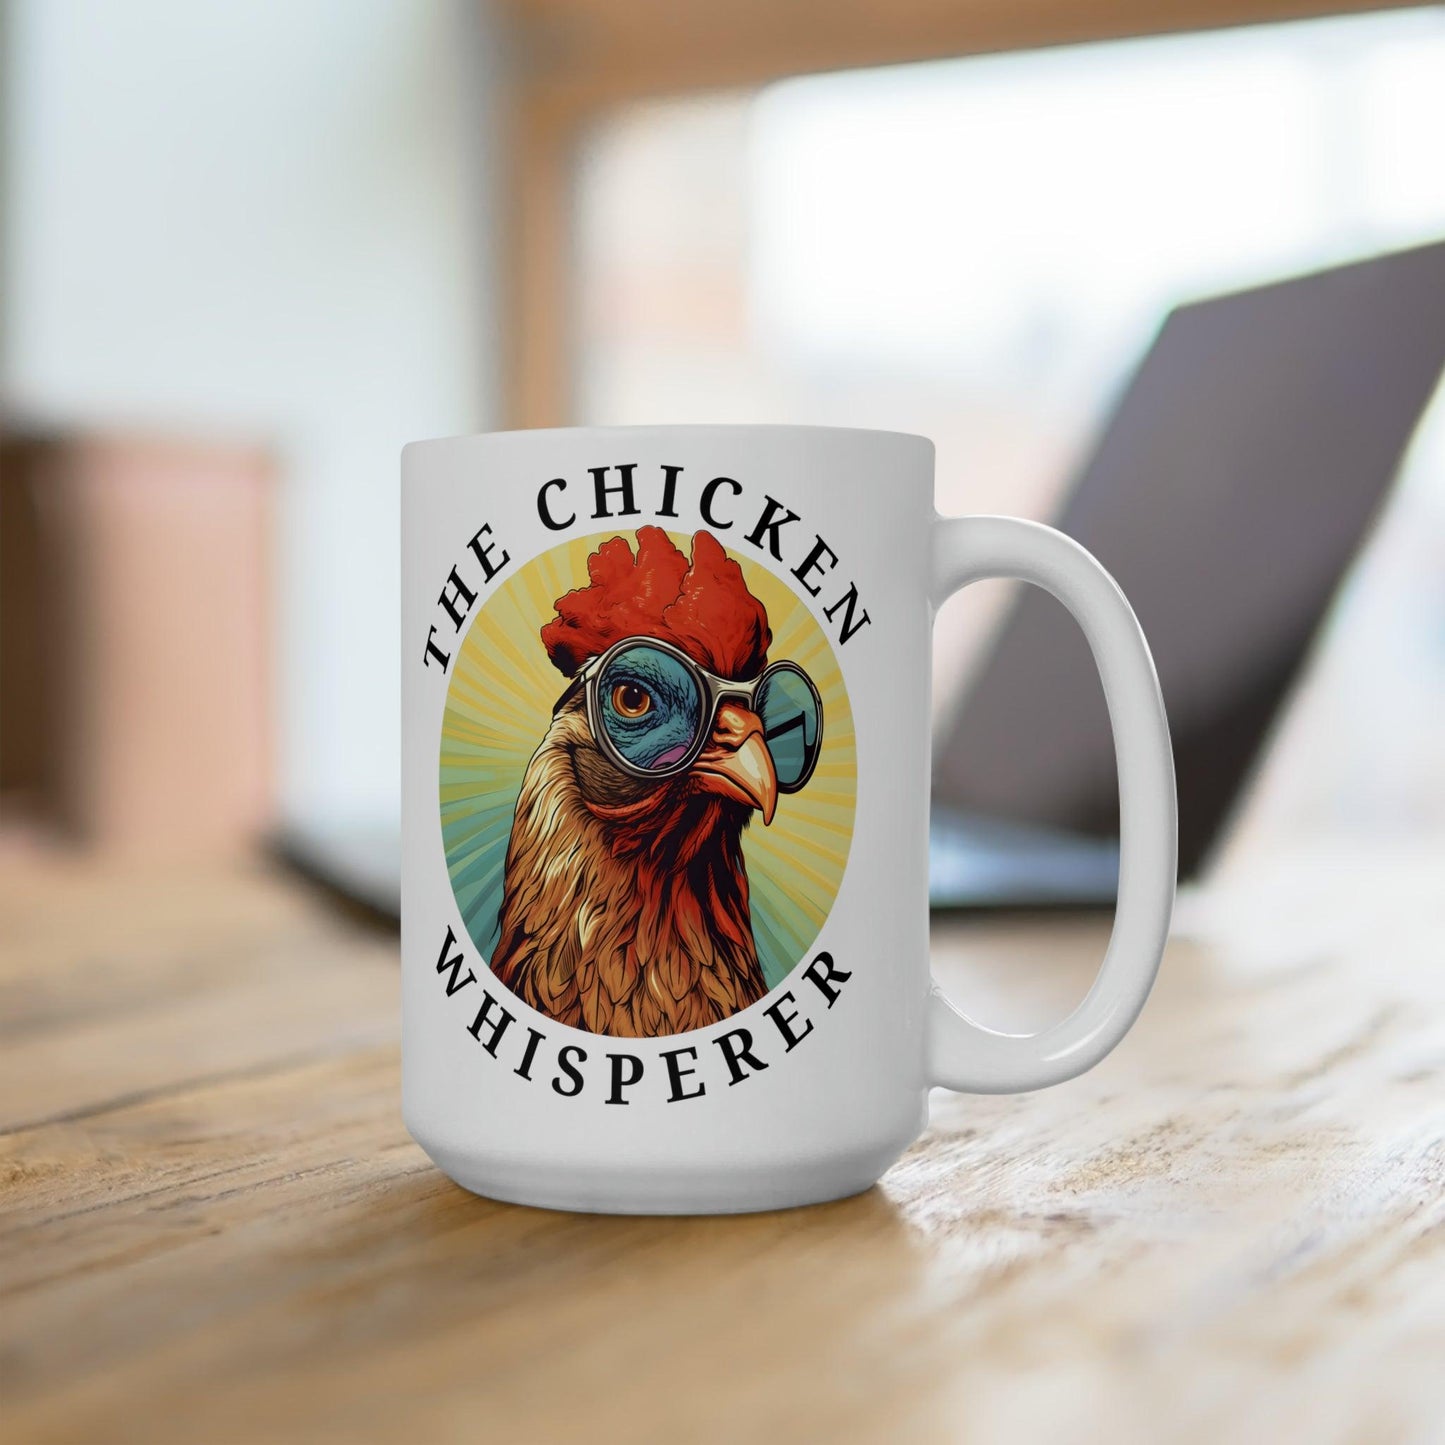 Funny Chicken Cup, Roster Mug Retro Vintage Mug The Chicken Whisperer Mug Chicken Coffee Mug